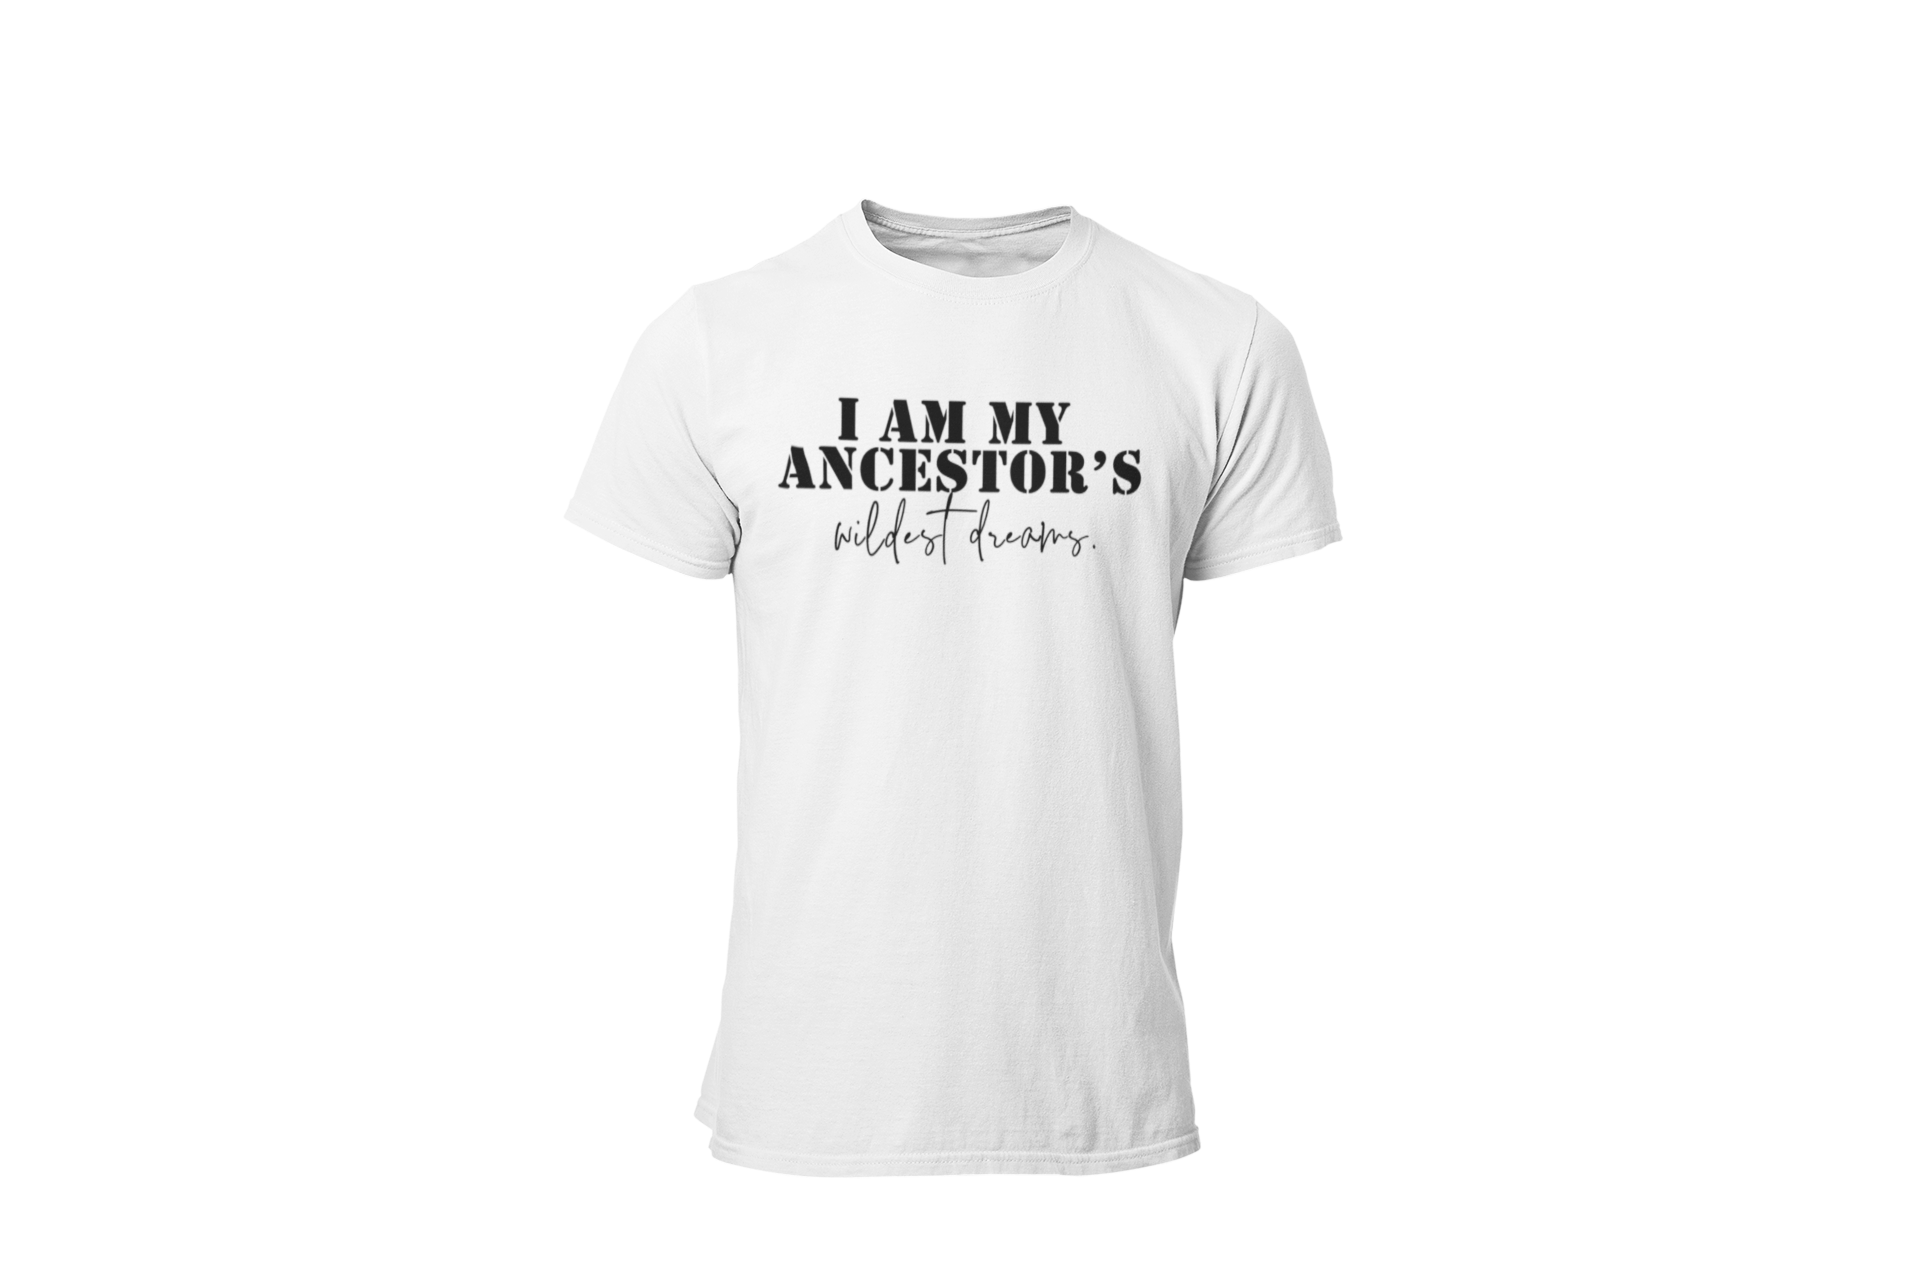 I'm My Ancestor's Wildest Dreams T-shirt